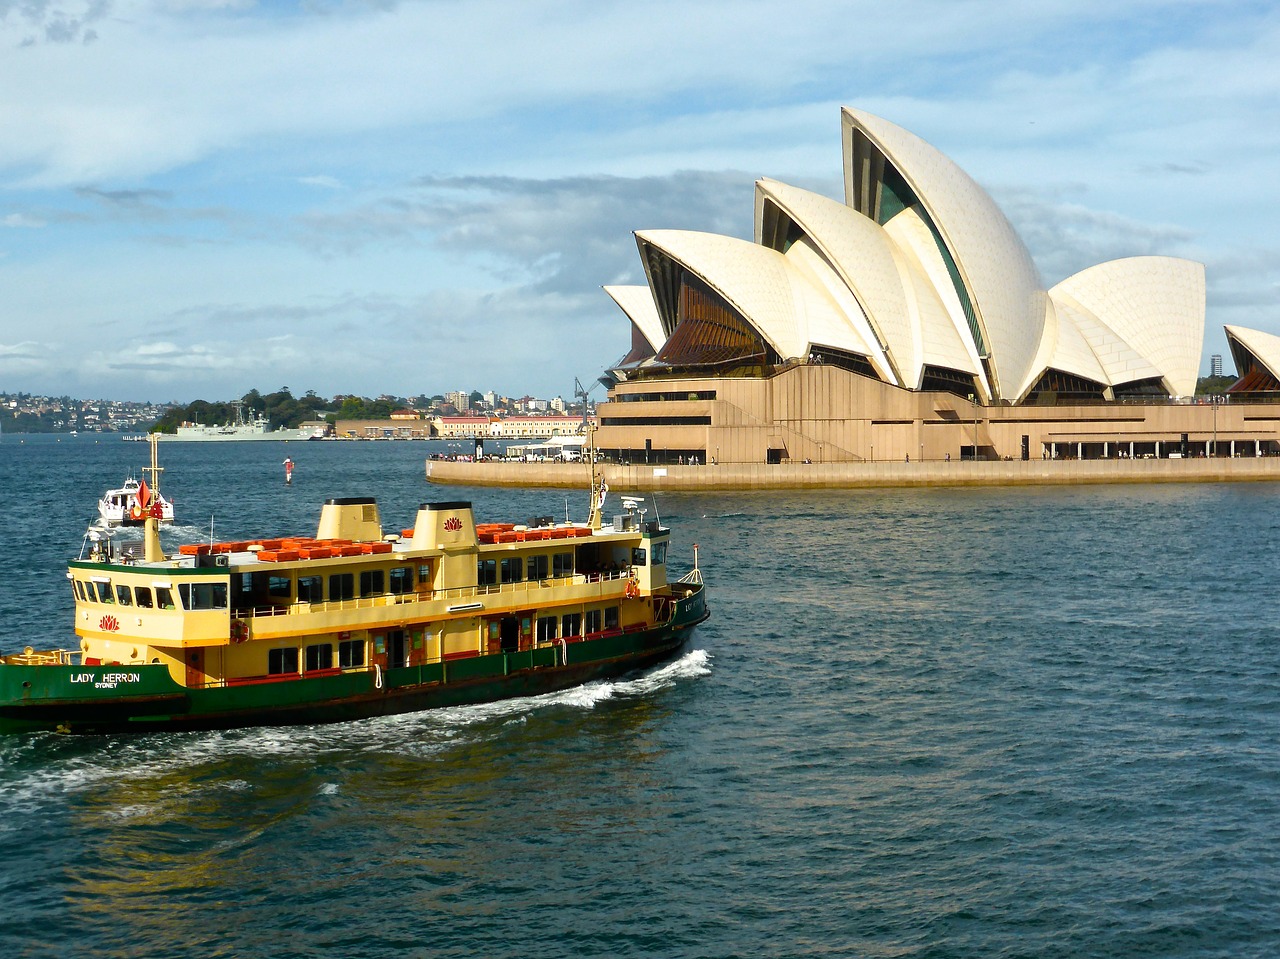 sydney opera house australia free photo